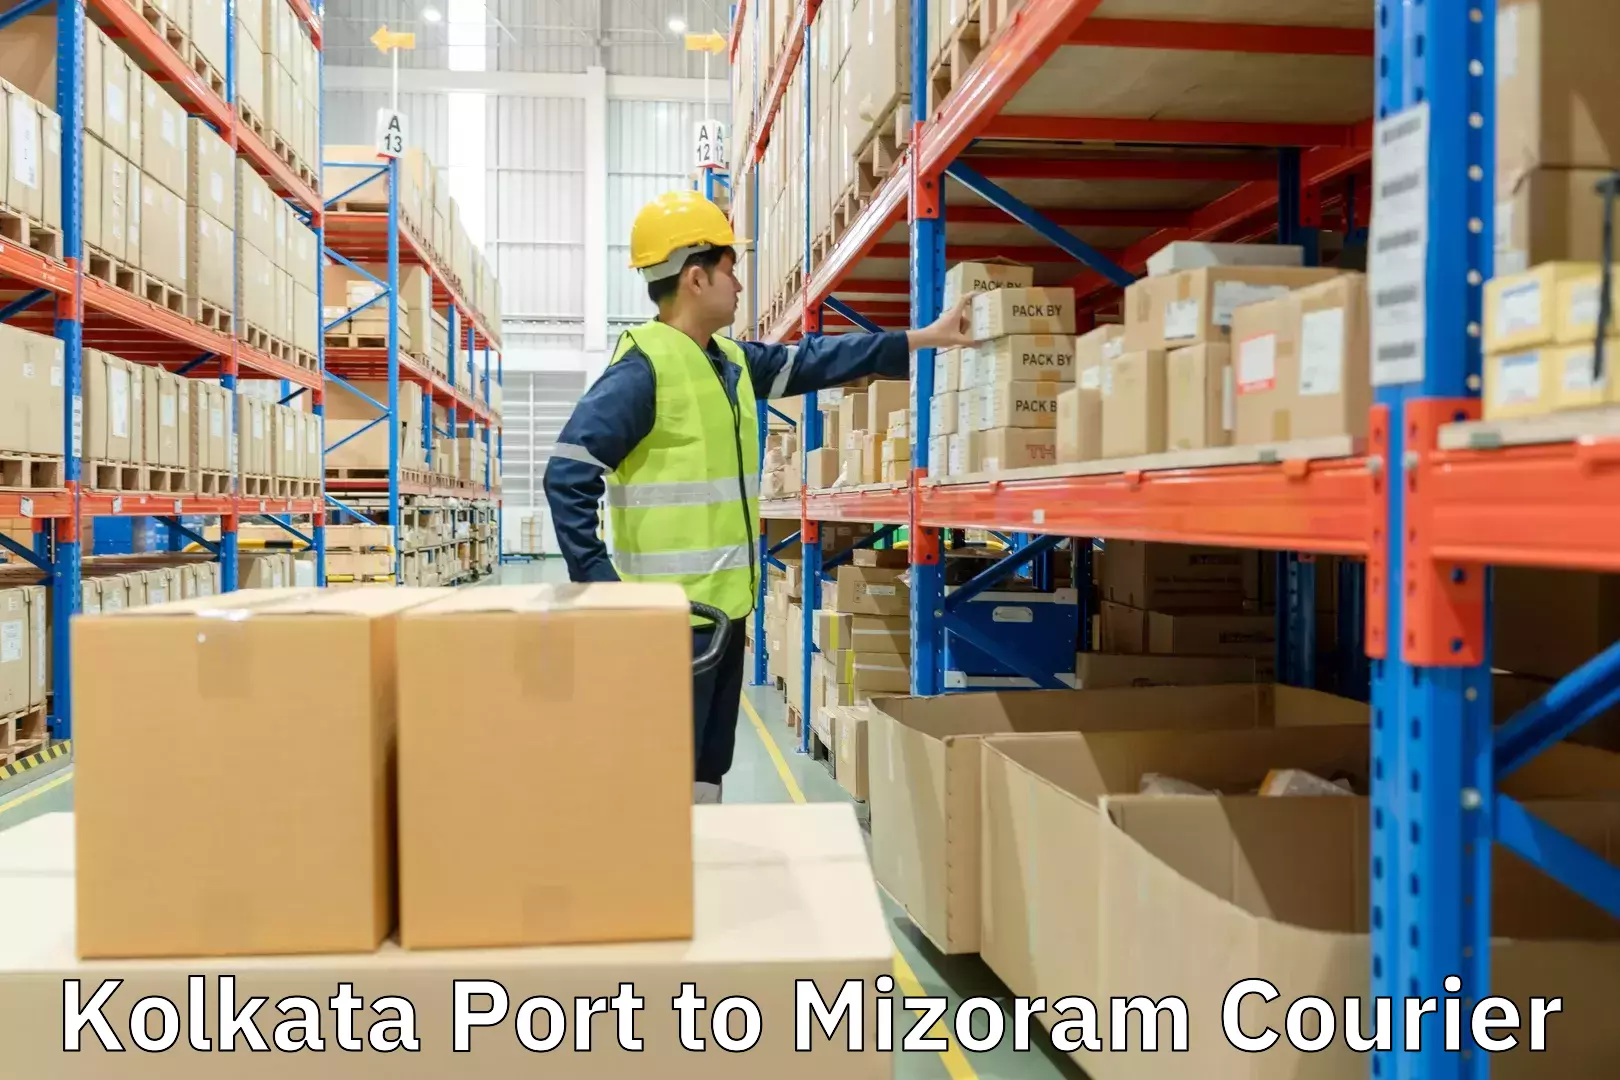 Premium courier services Kolkata Port to Mizoram